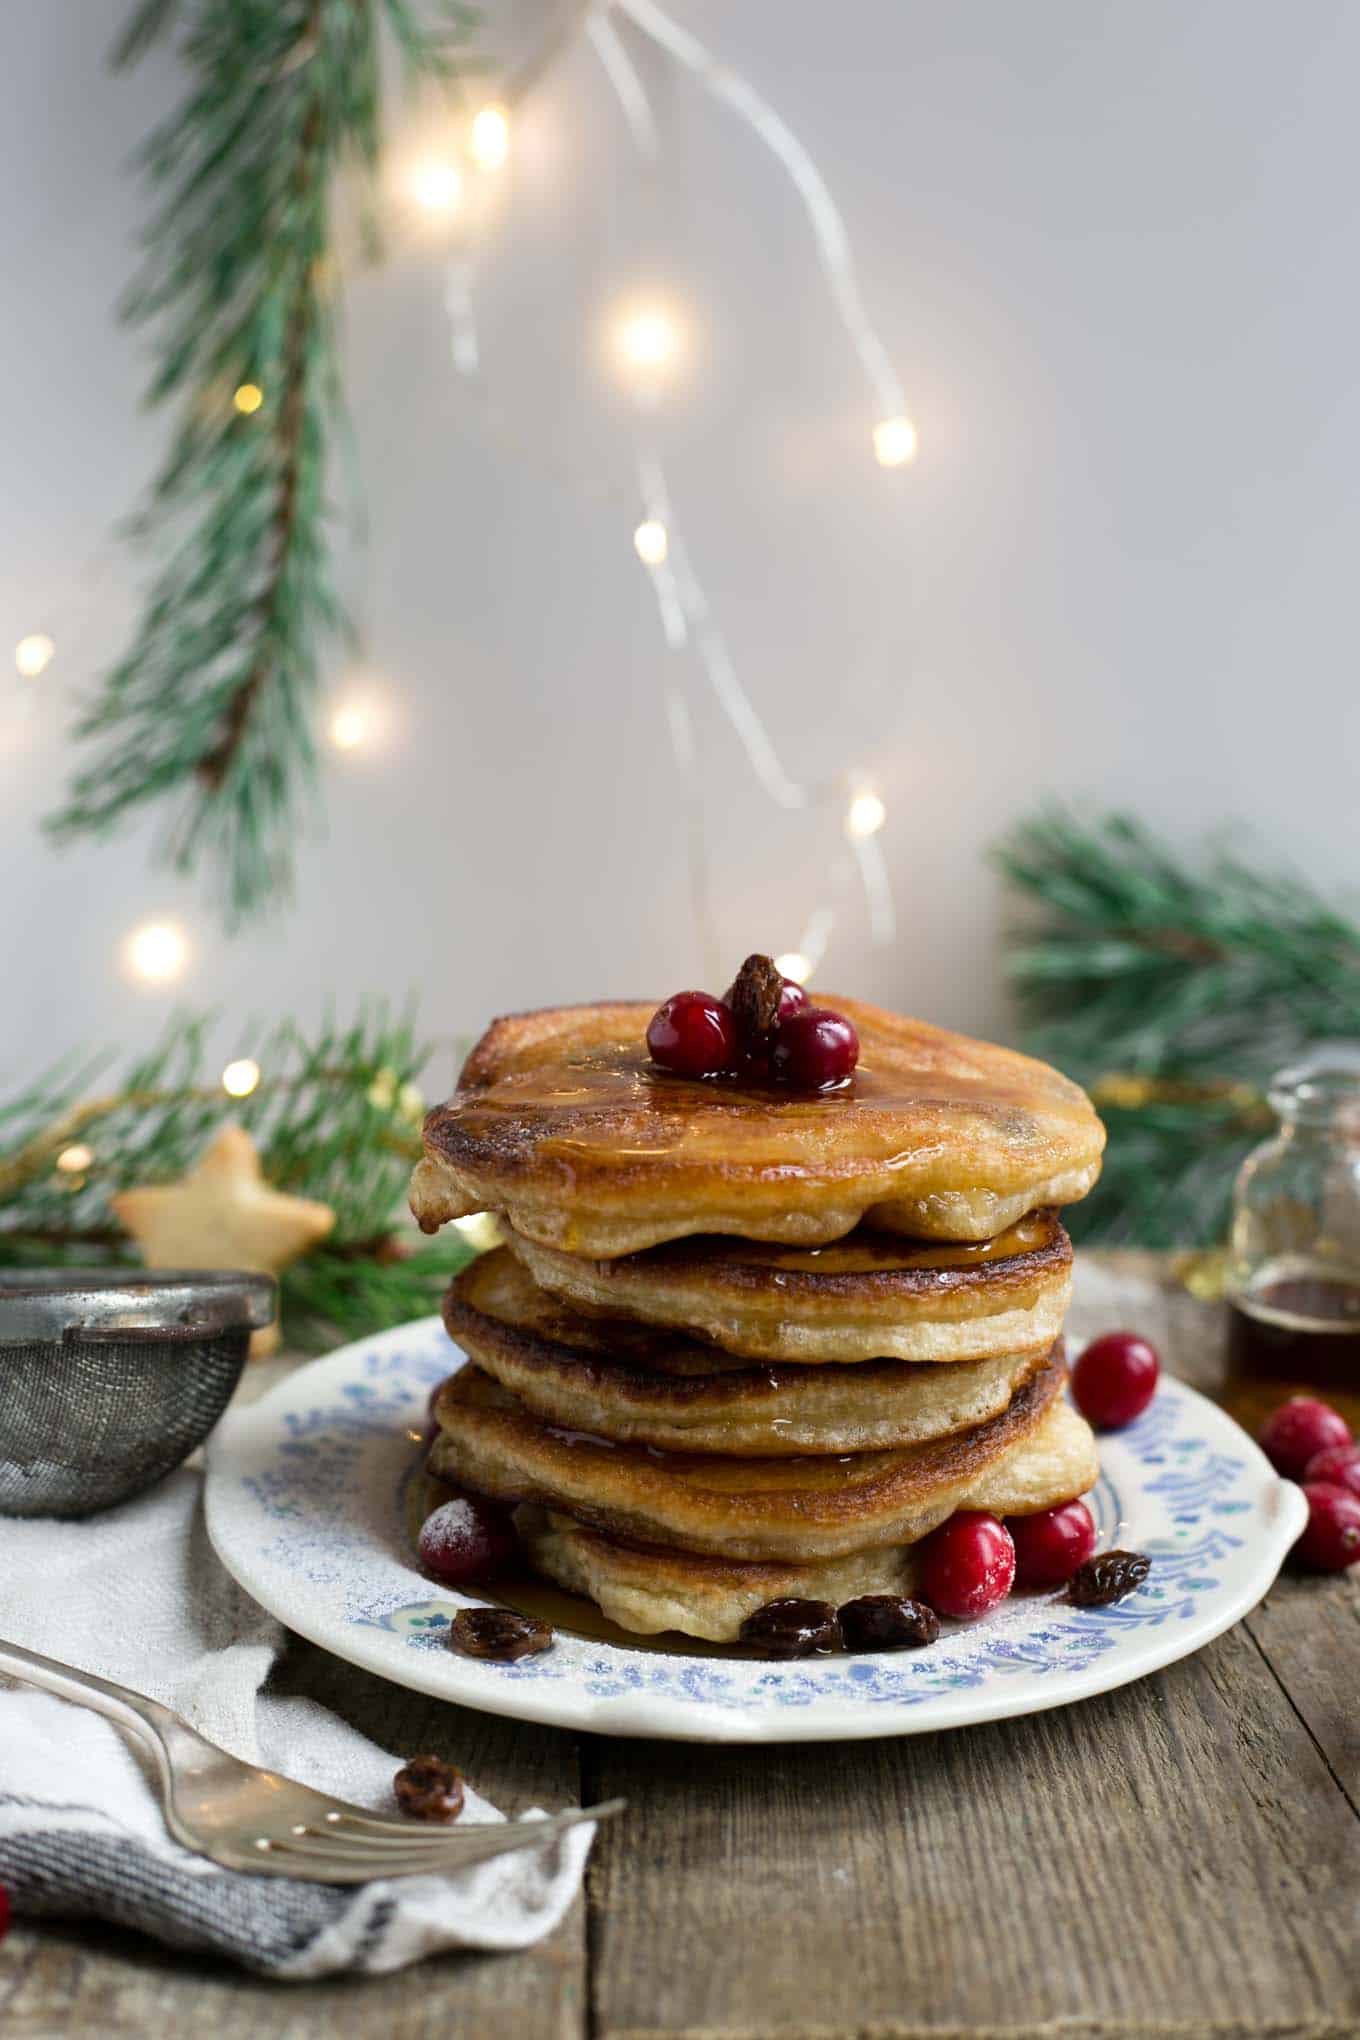 Rum & raisin pancakes, delicious and super festive treat for #Christmas breakfast! #vegan #pancakes #dairyfree | via @annabanana.co